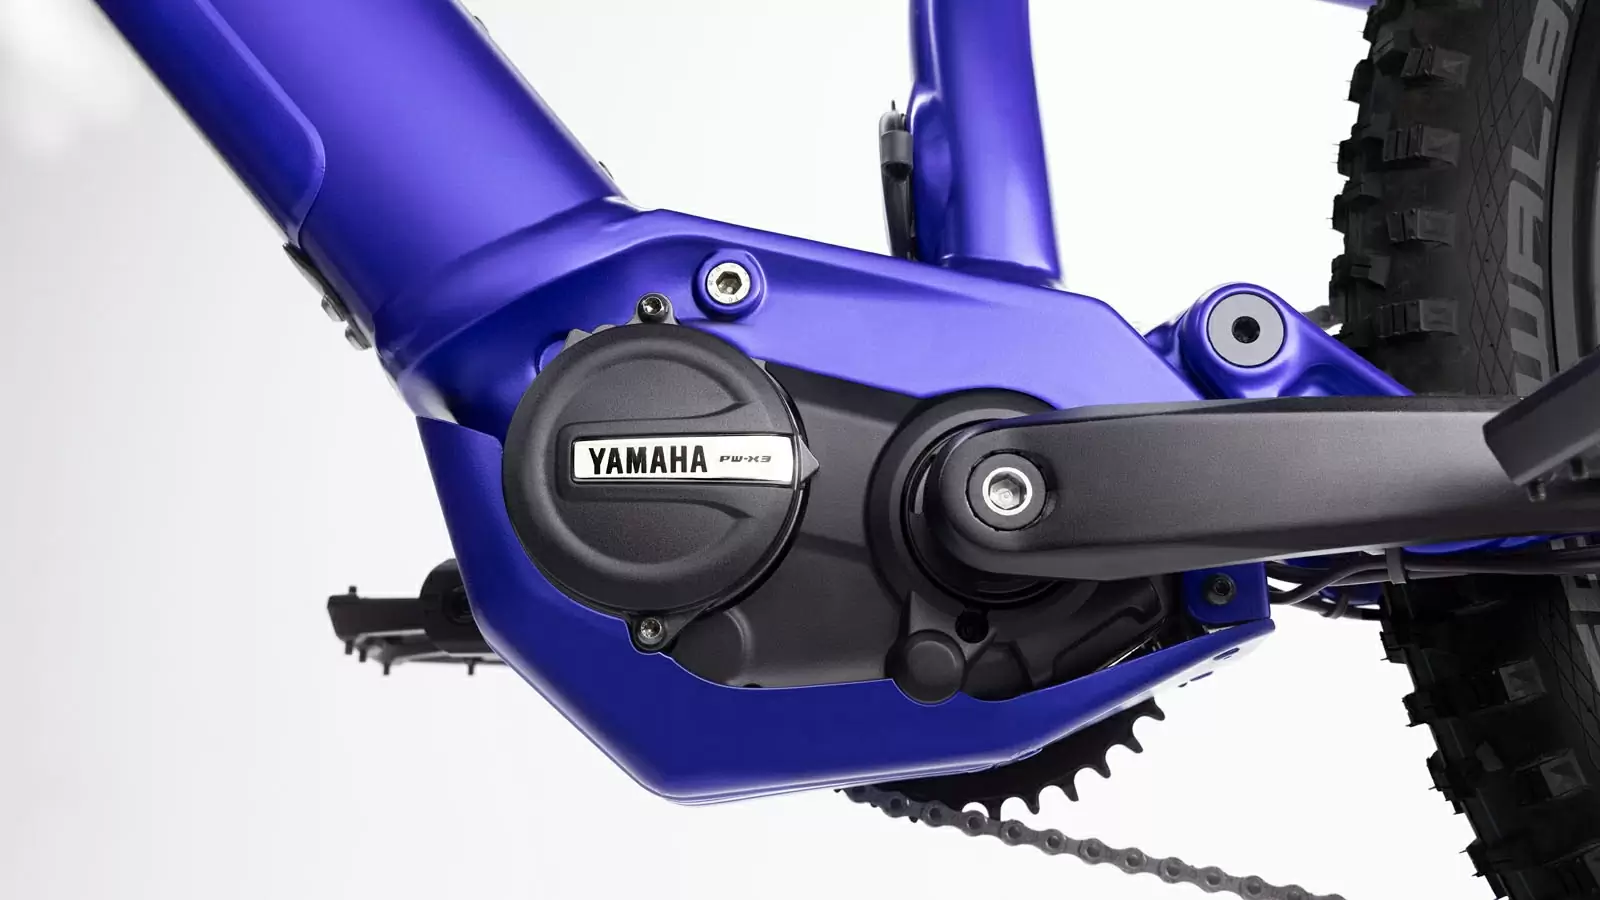 Yamaha Manual Drive Unit, Display Unit, Battery Pack, Battery Charger - image